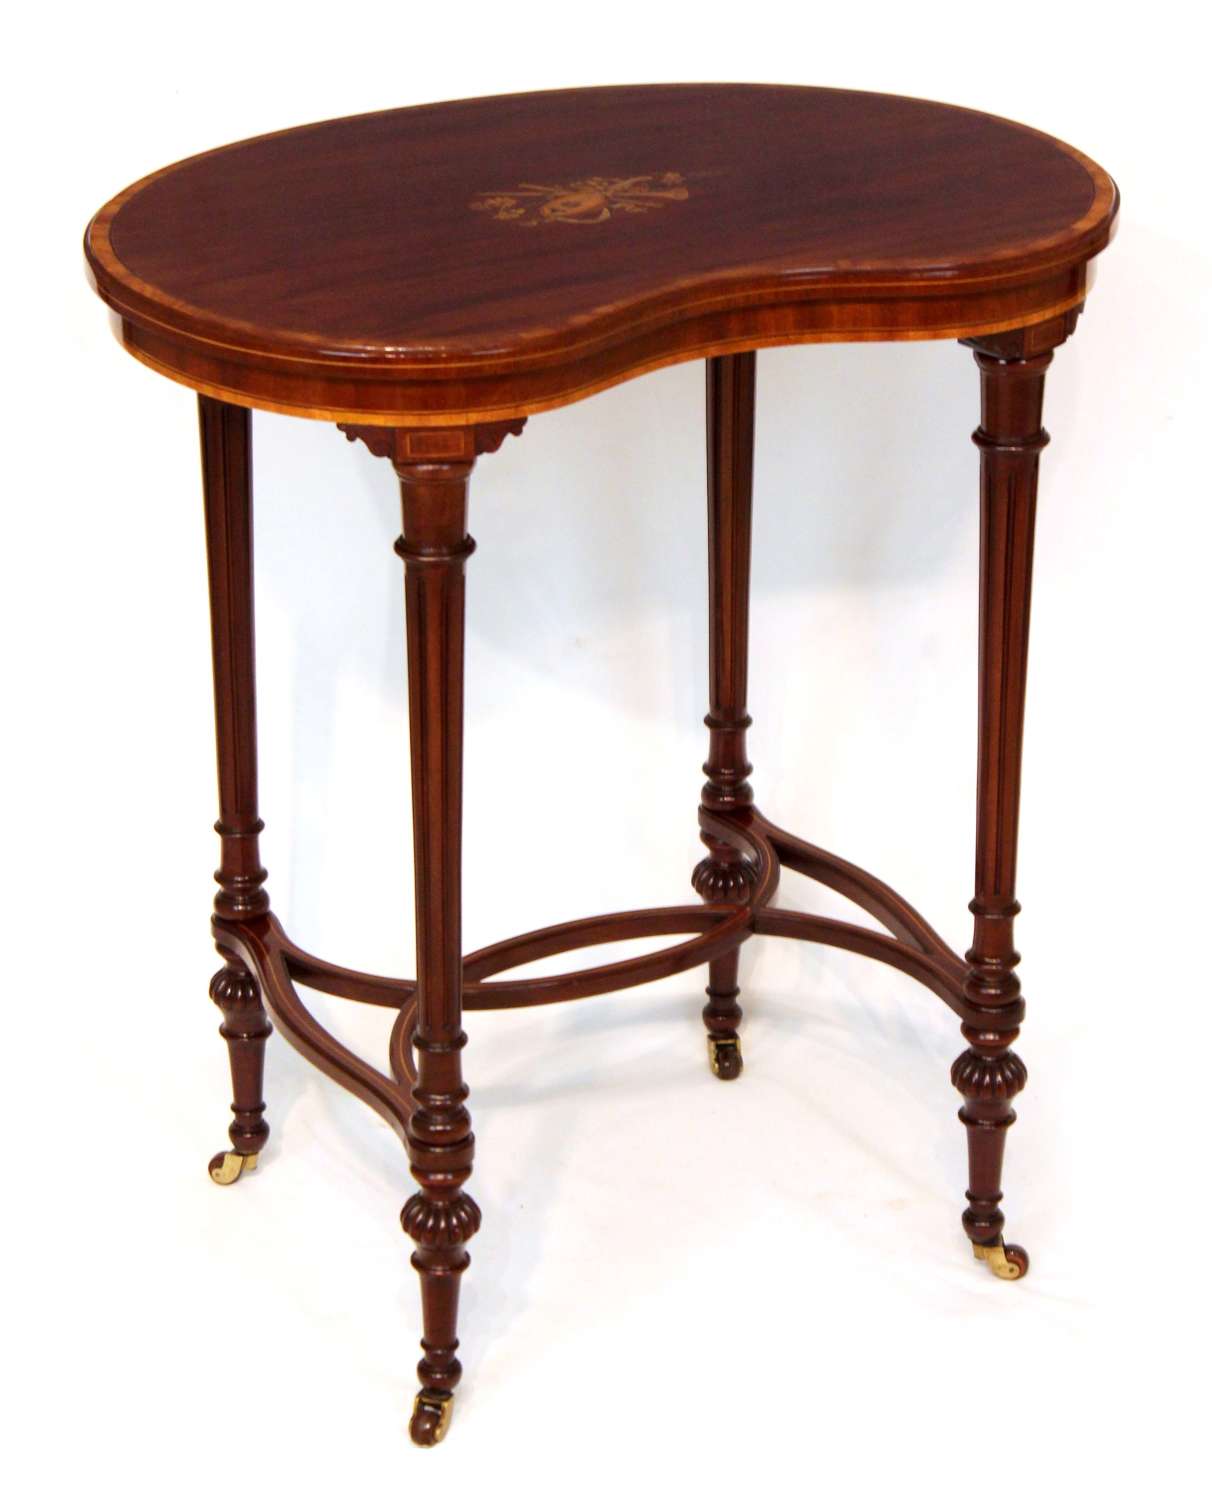 An Elegant Victorian Mahogany Kidney Shaped Side Table